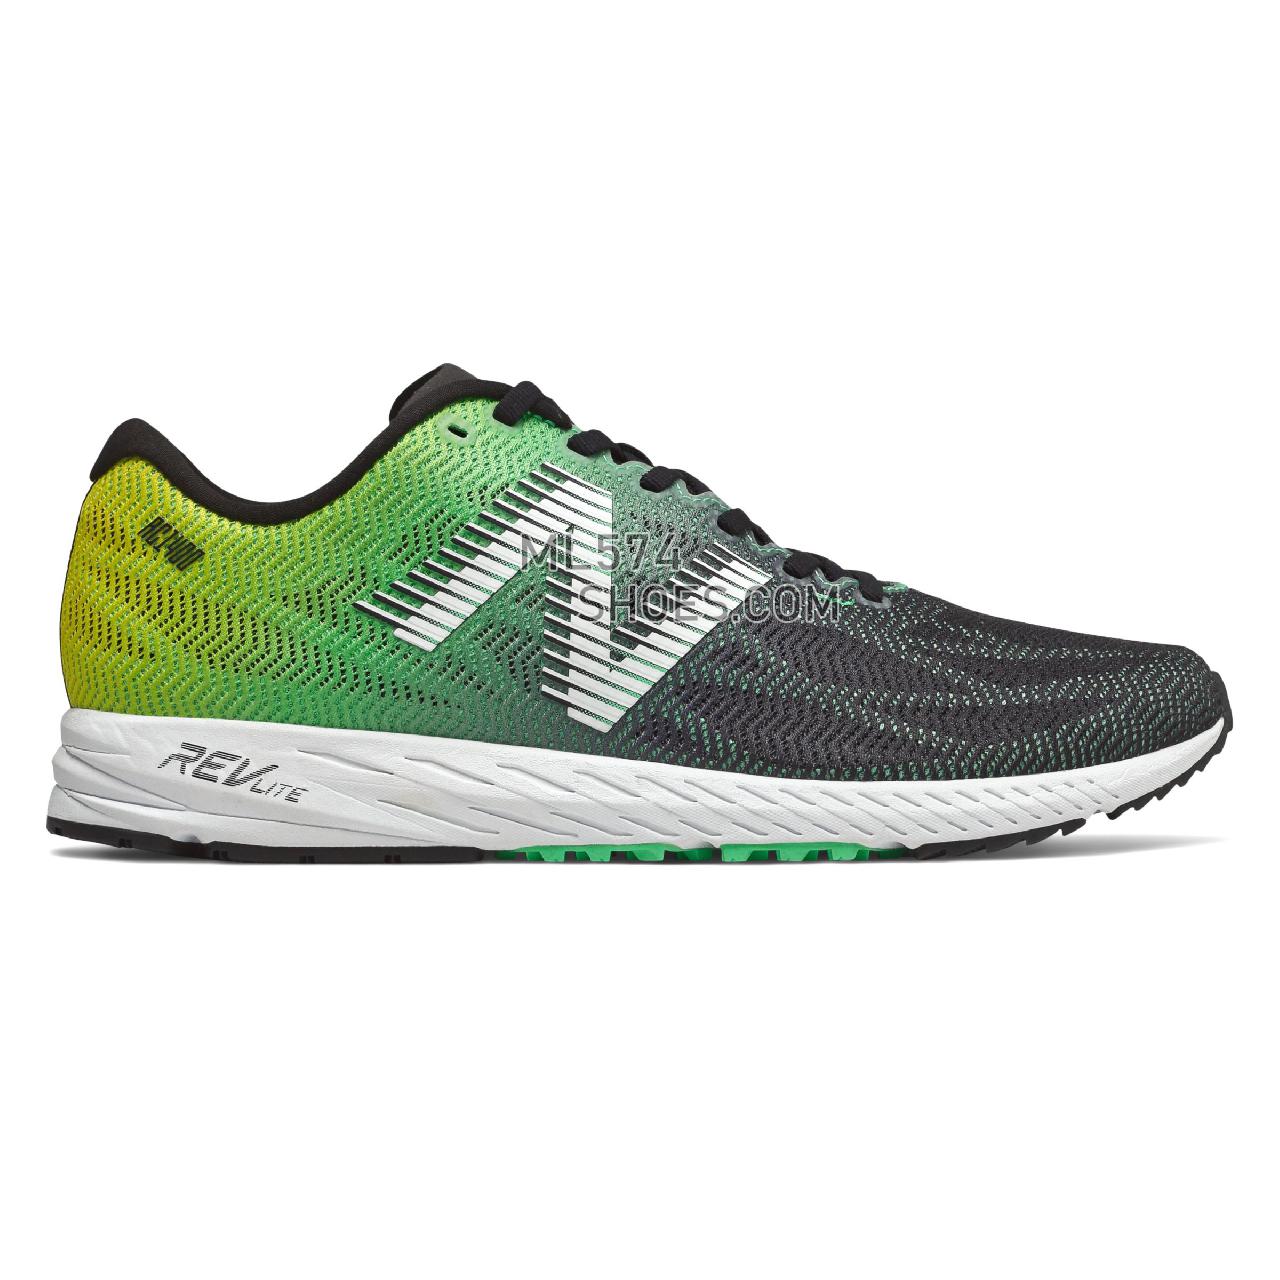 New Balance 1400v6 - Men's 1400v6 Running - Black with Neon Emerald and Hi Lite - M1400BG6